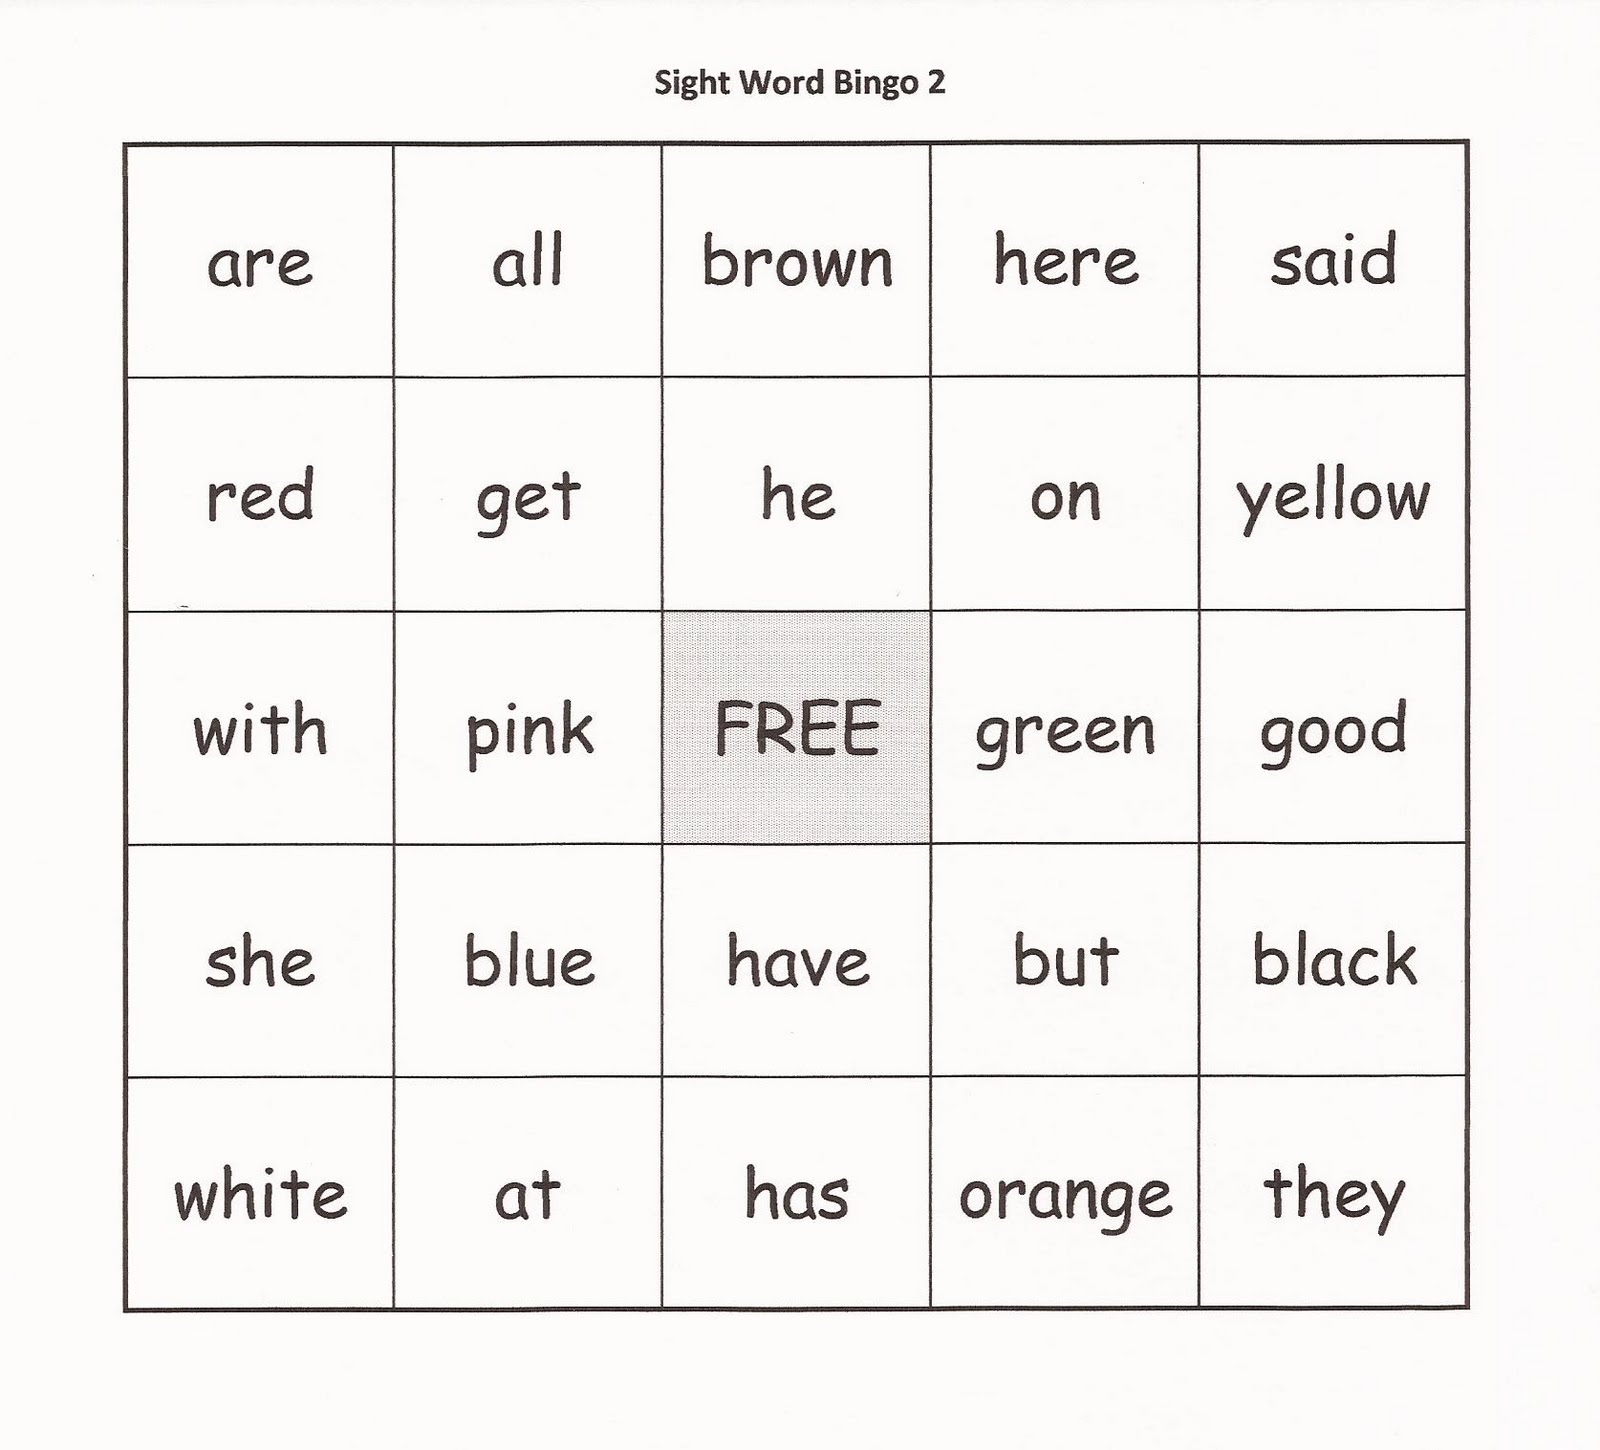 Relentlessly Fun, Deceptively Educational: Sight Word Bingo
